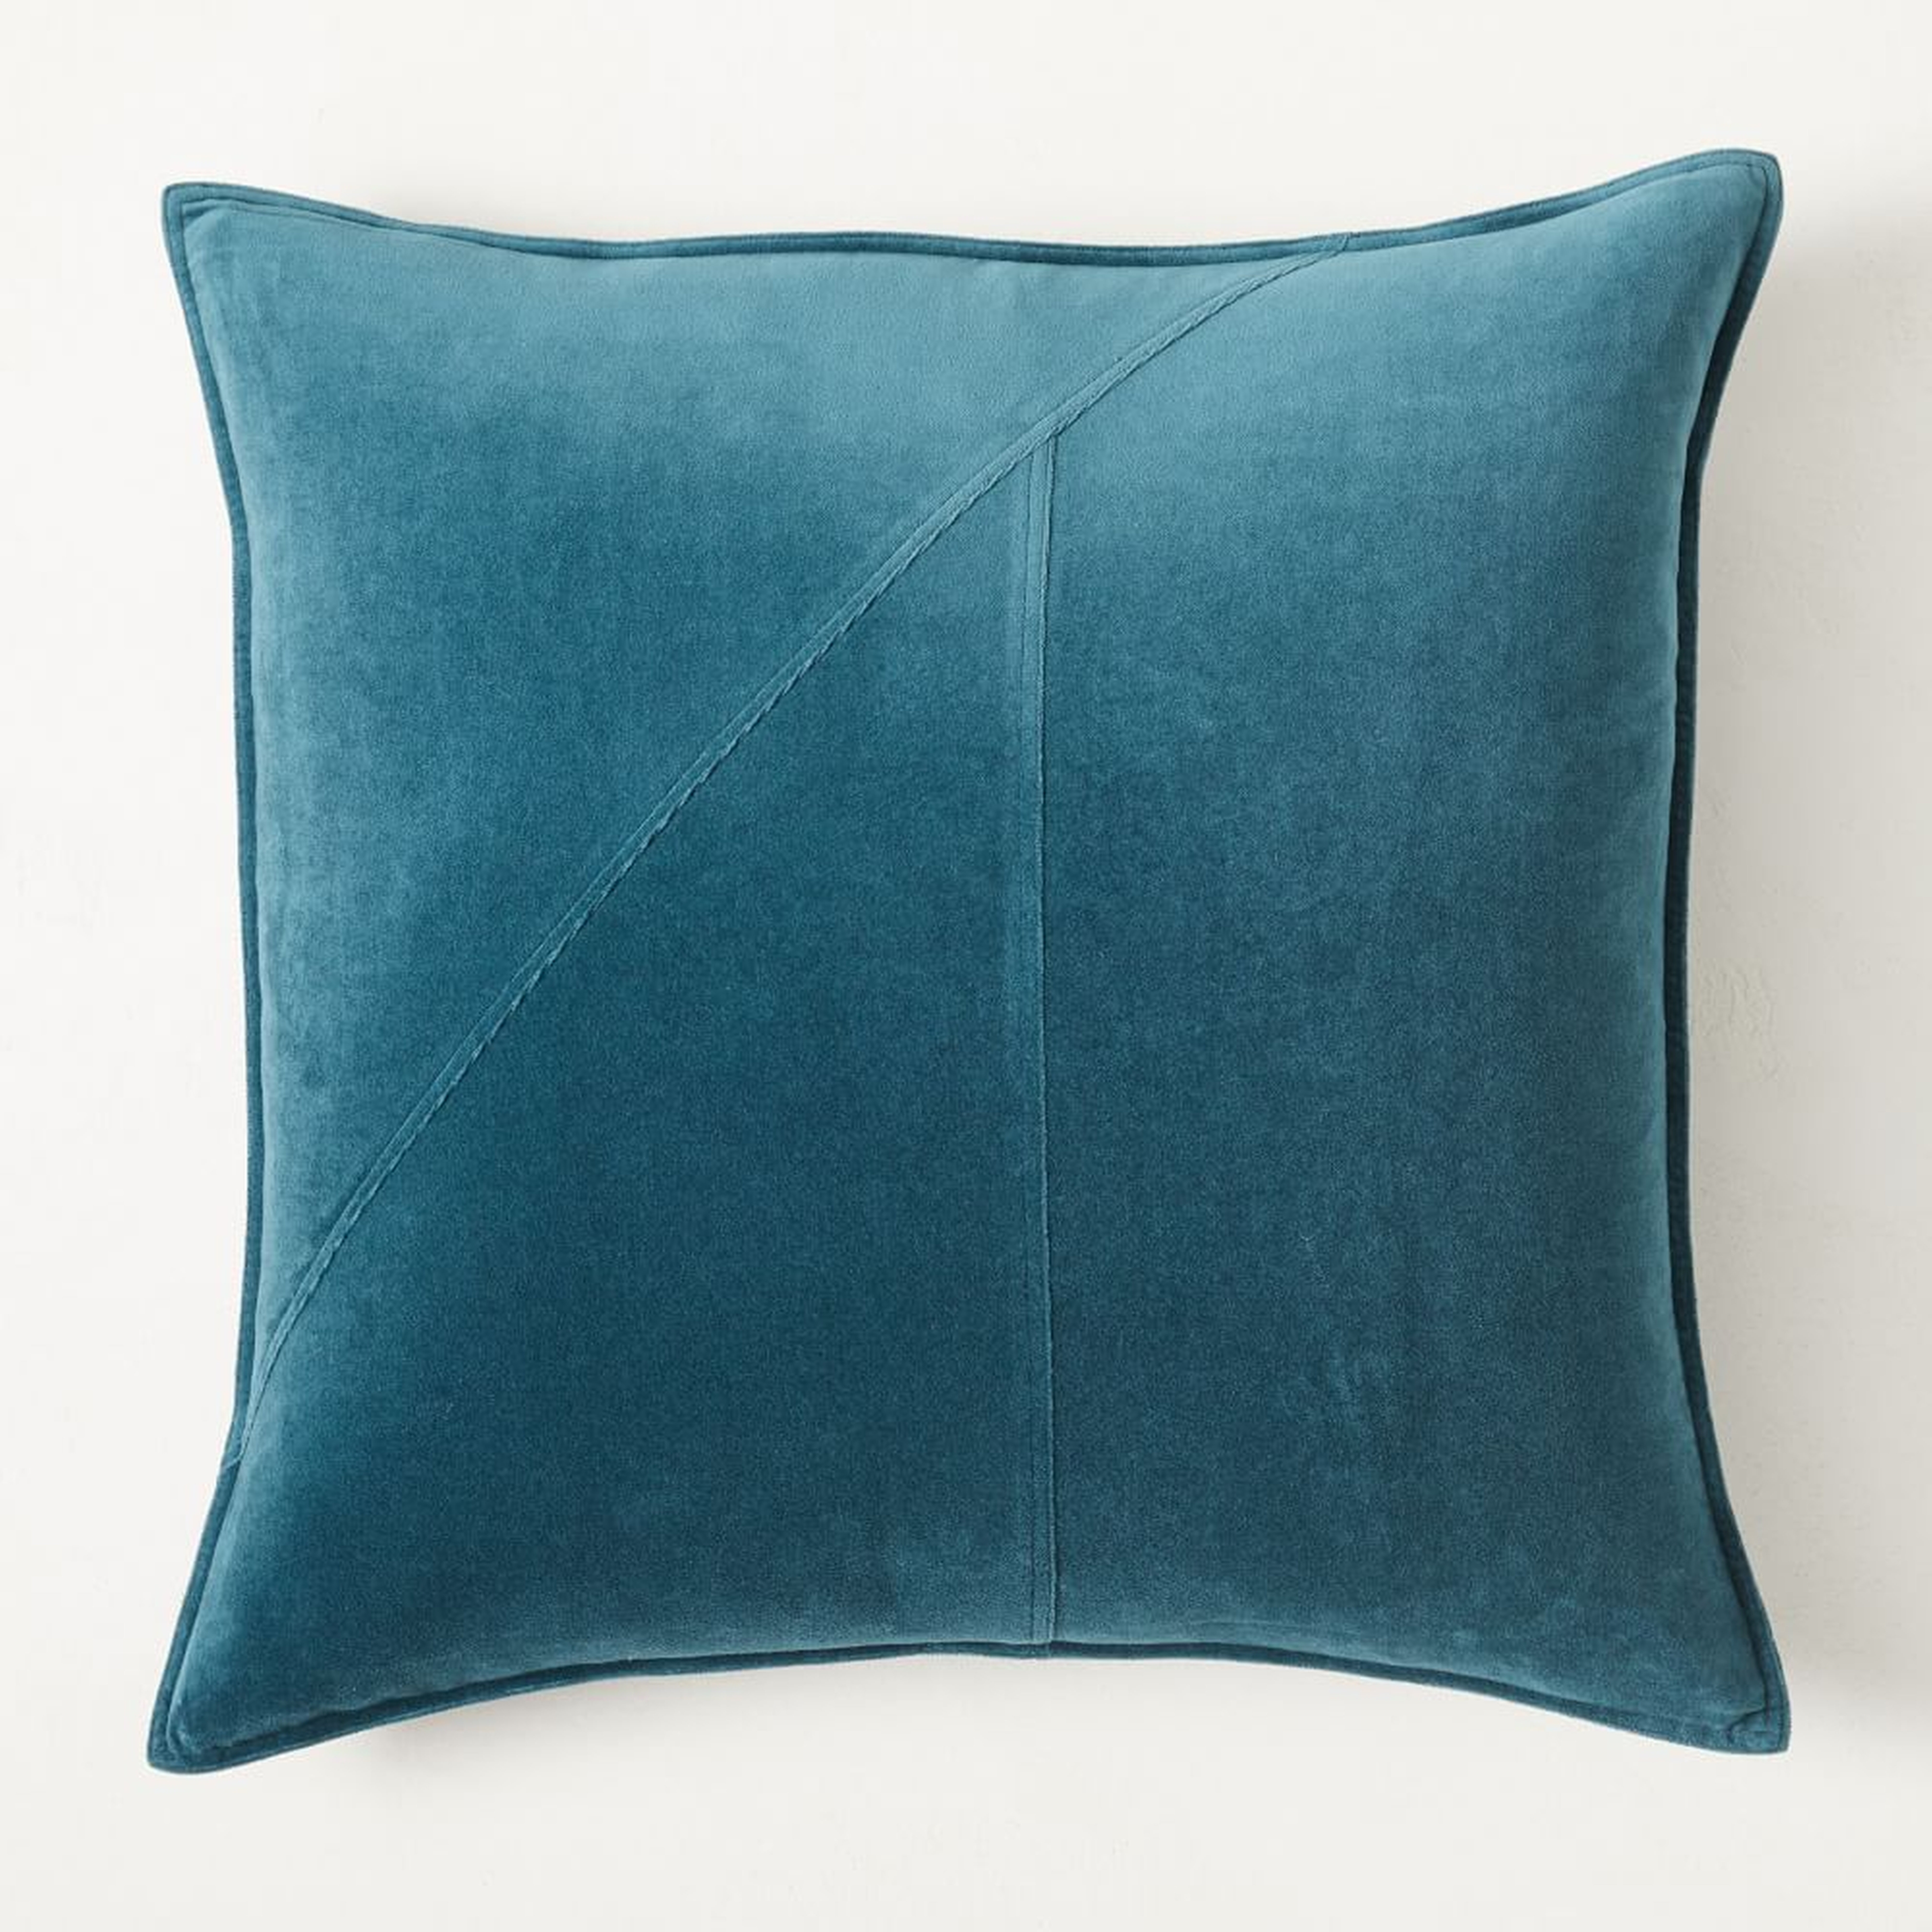 Washed Cotton Velvet Pillow Cover, 24"x24", Blue Teal, Set of 2 - West Elm